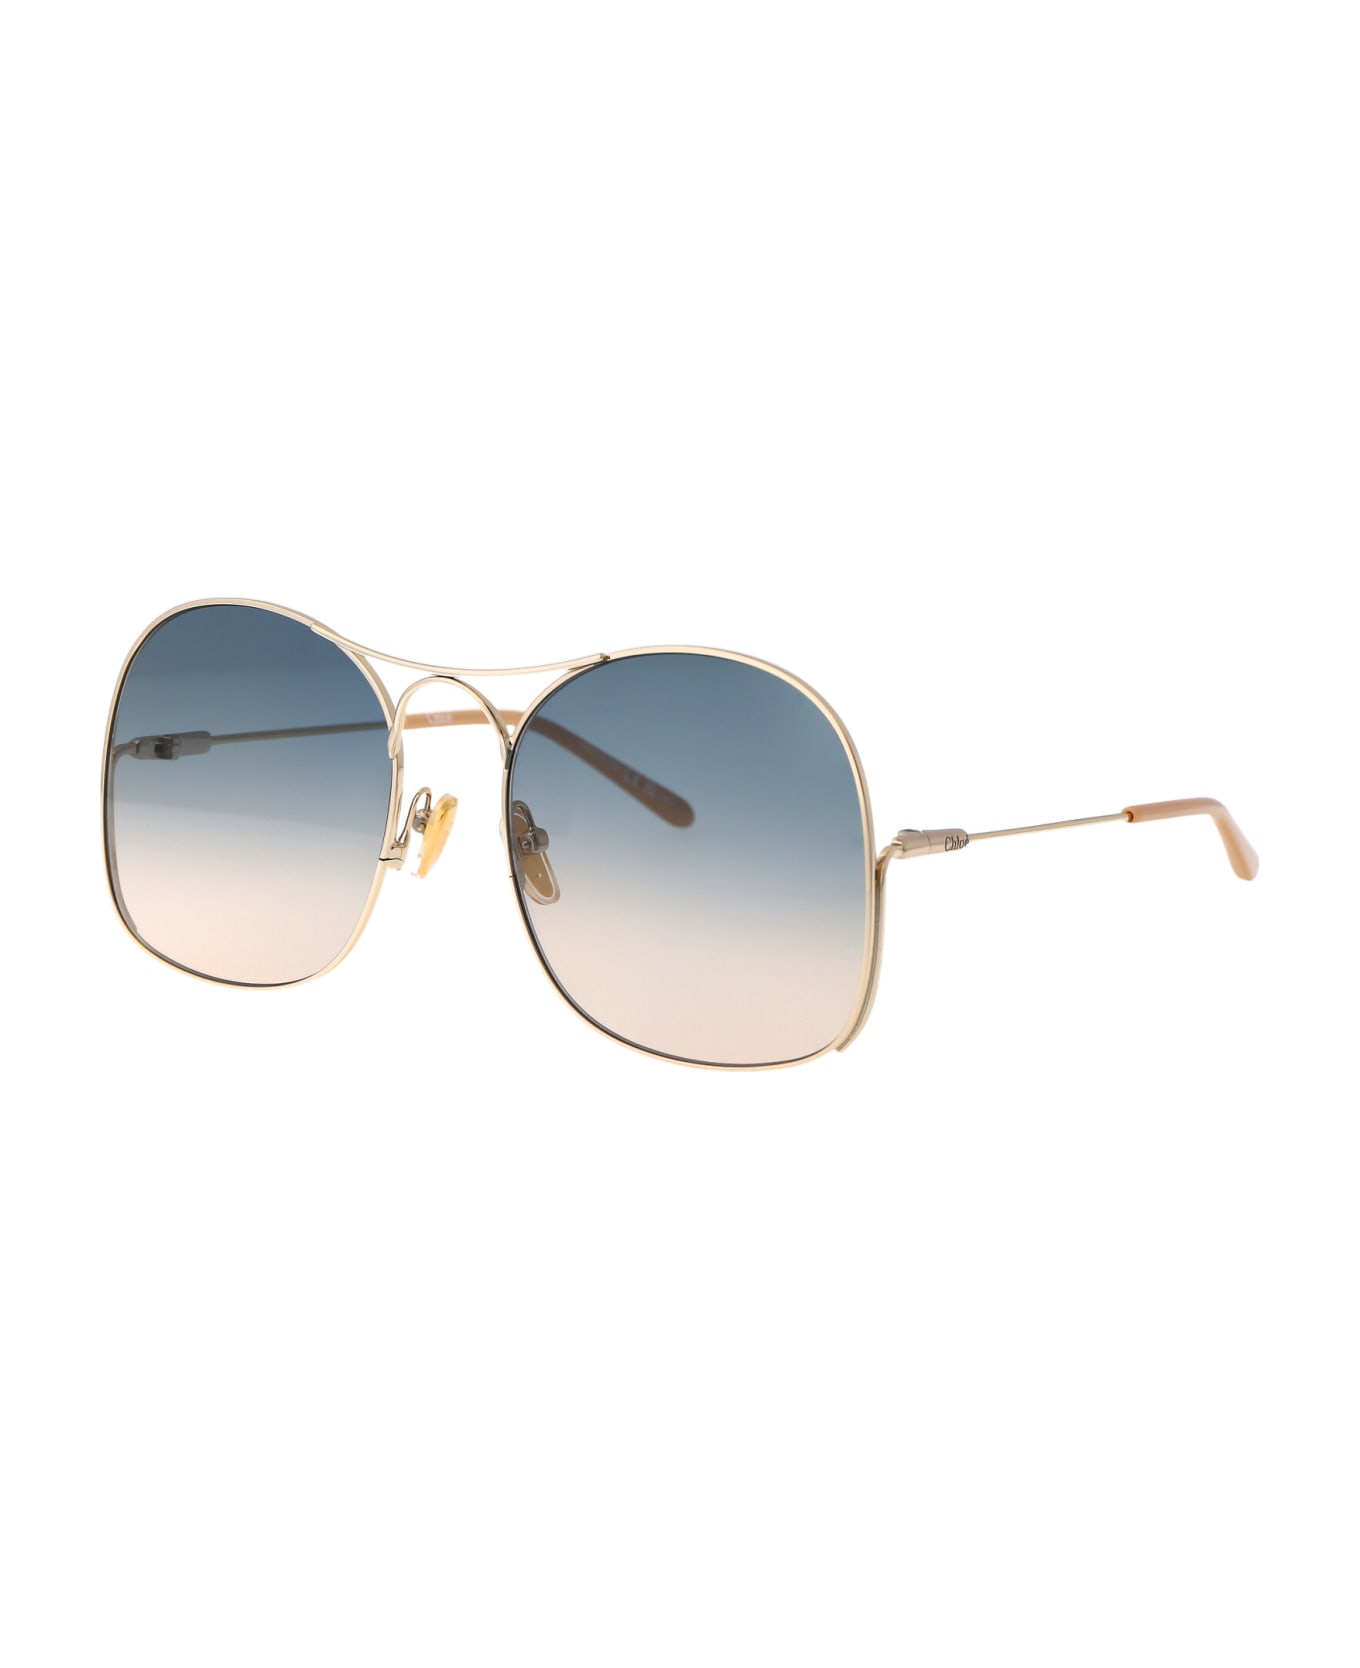 Chloé Eyewear Ch0164s Sunglasses - 002 GOLD GOLD GREEN サングラス